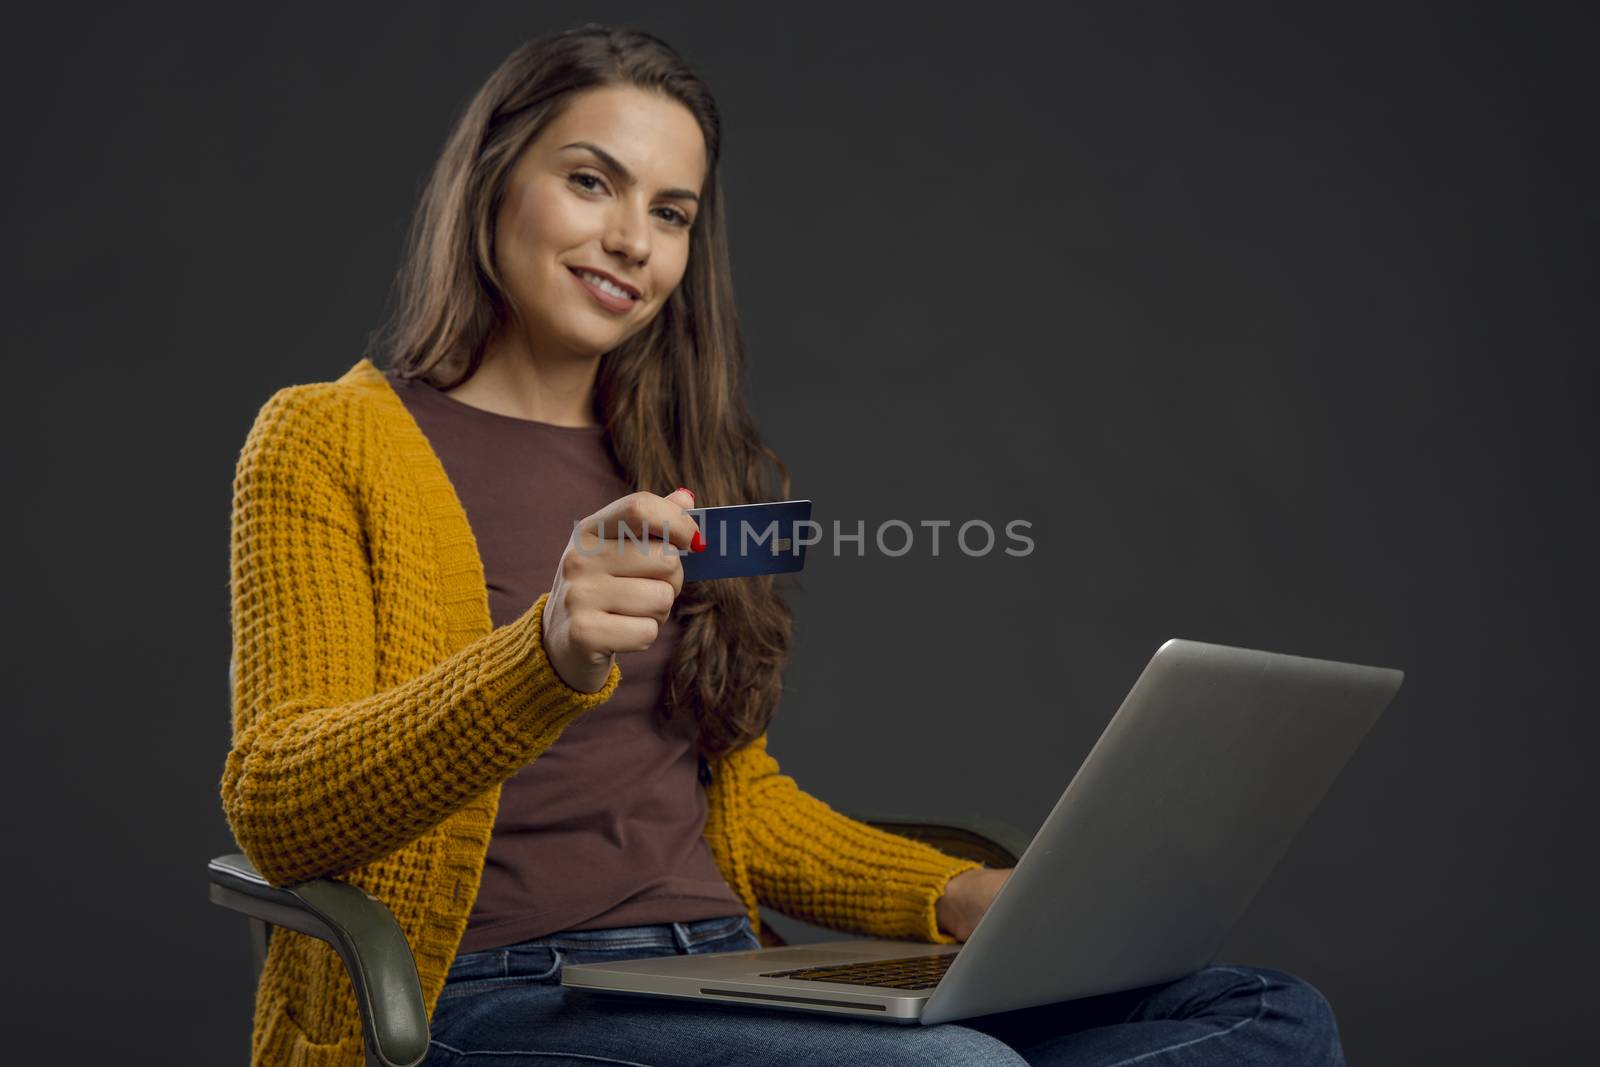 Beautiful woman doing some online shopping